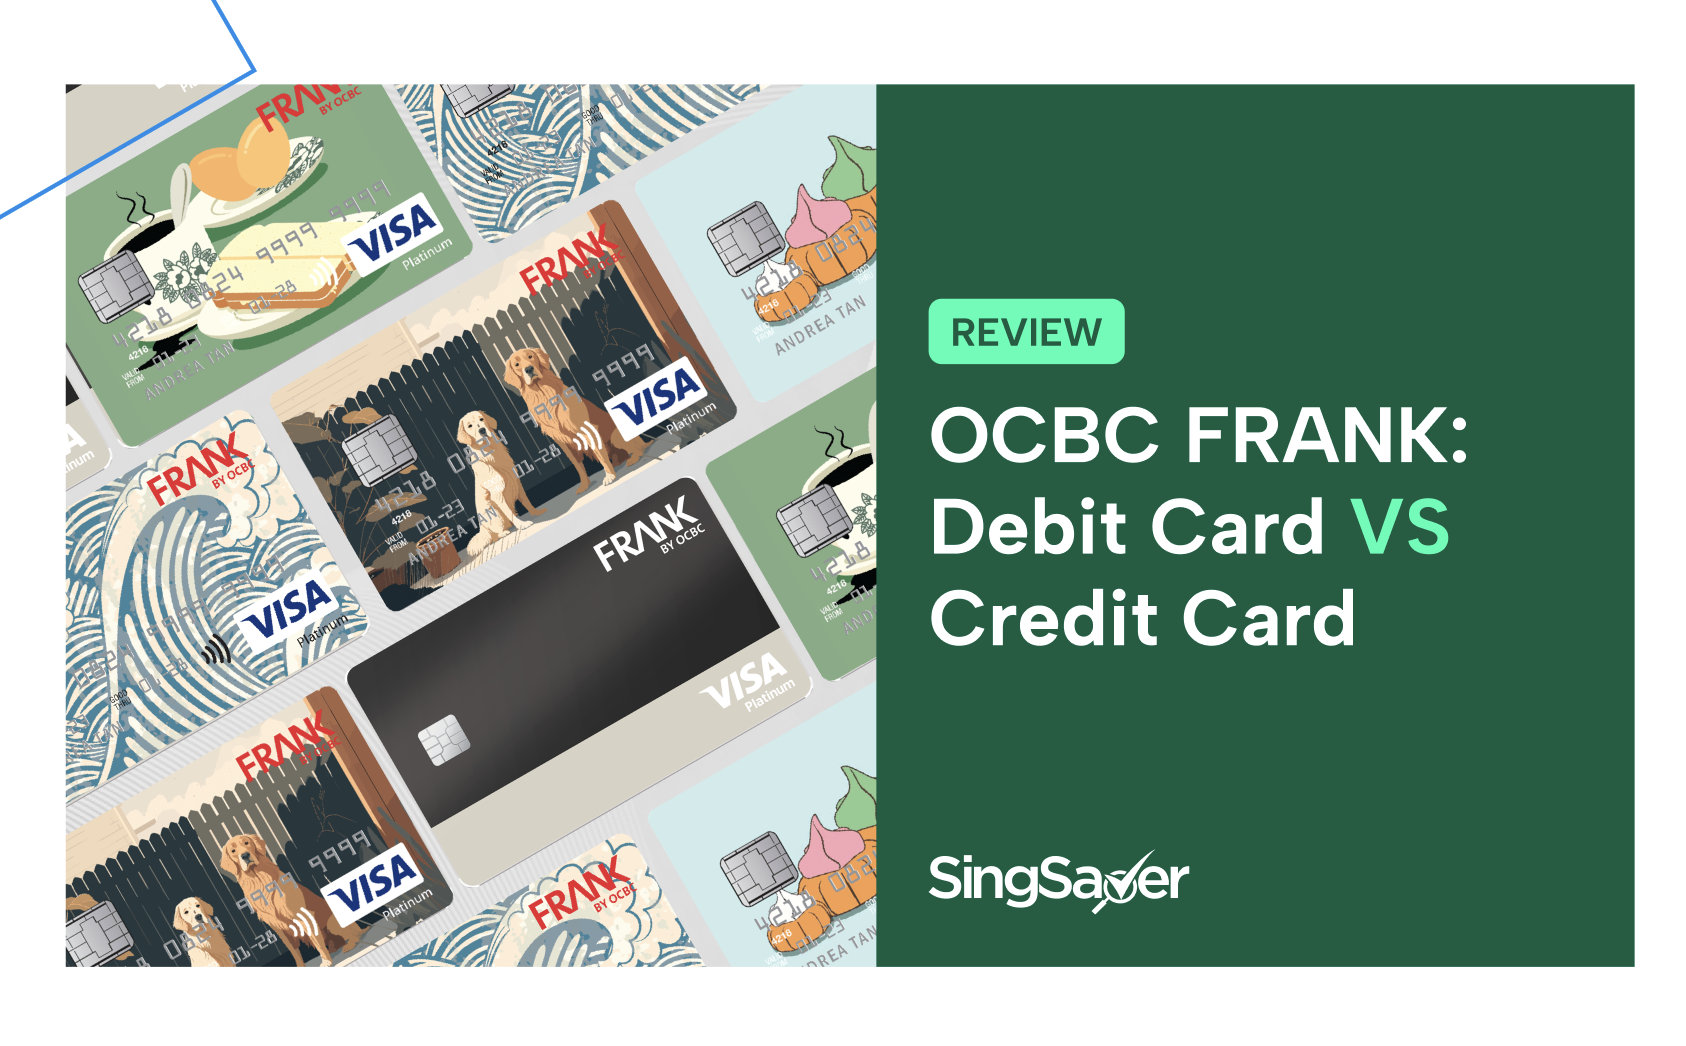 22 sep_ocbc frank debit card vs credit card_blog hero_v2